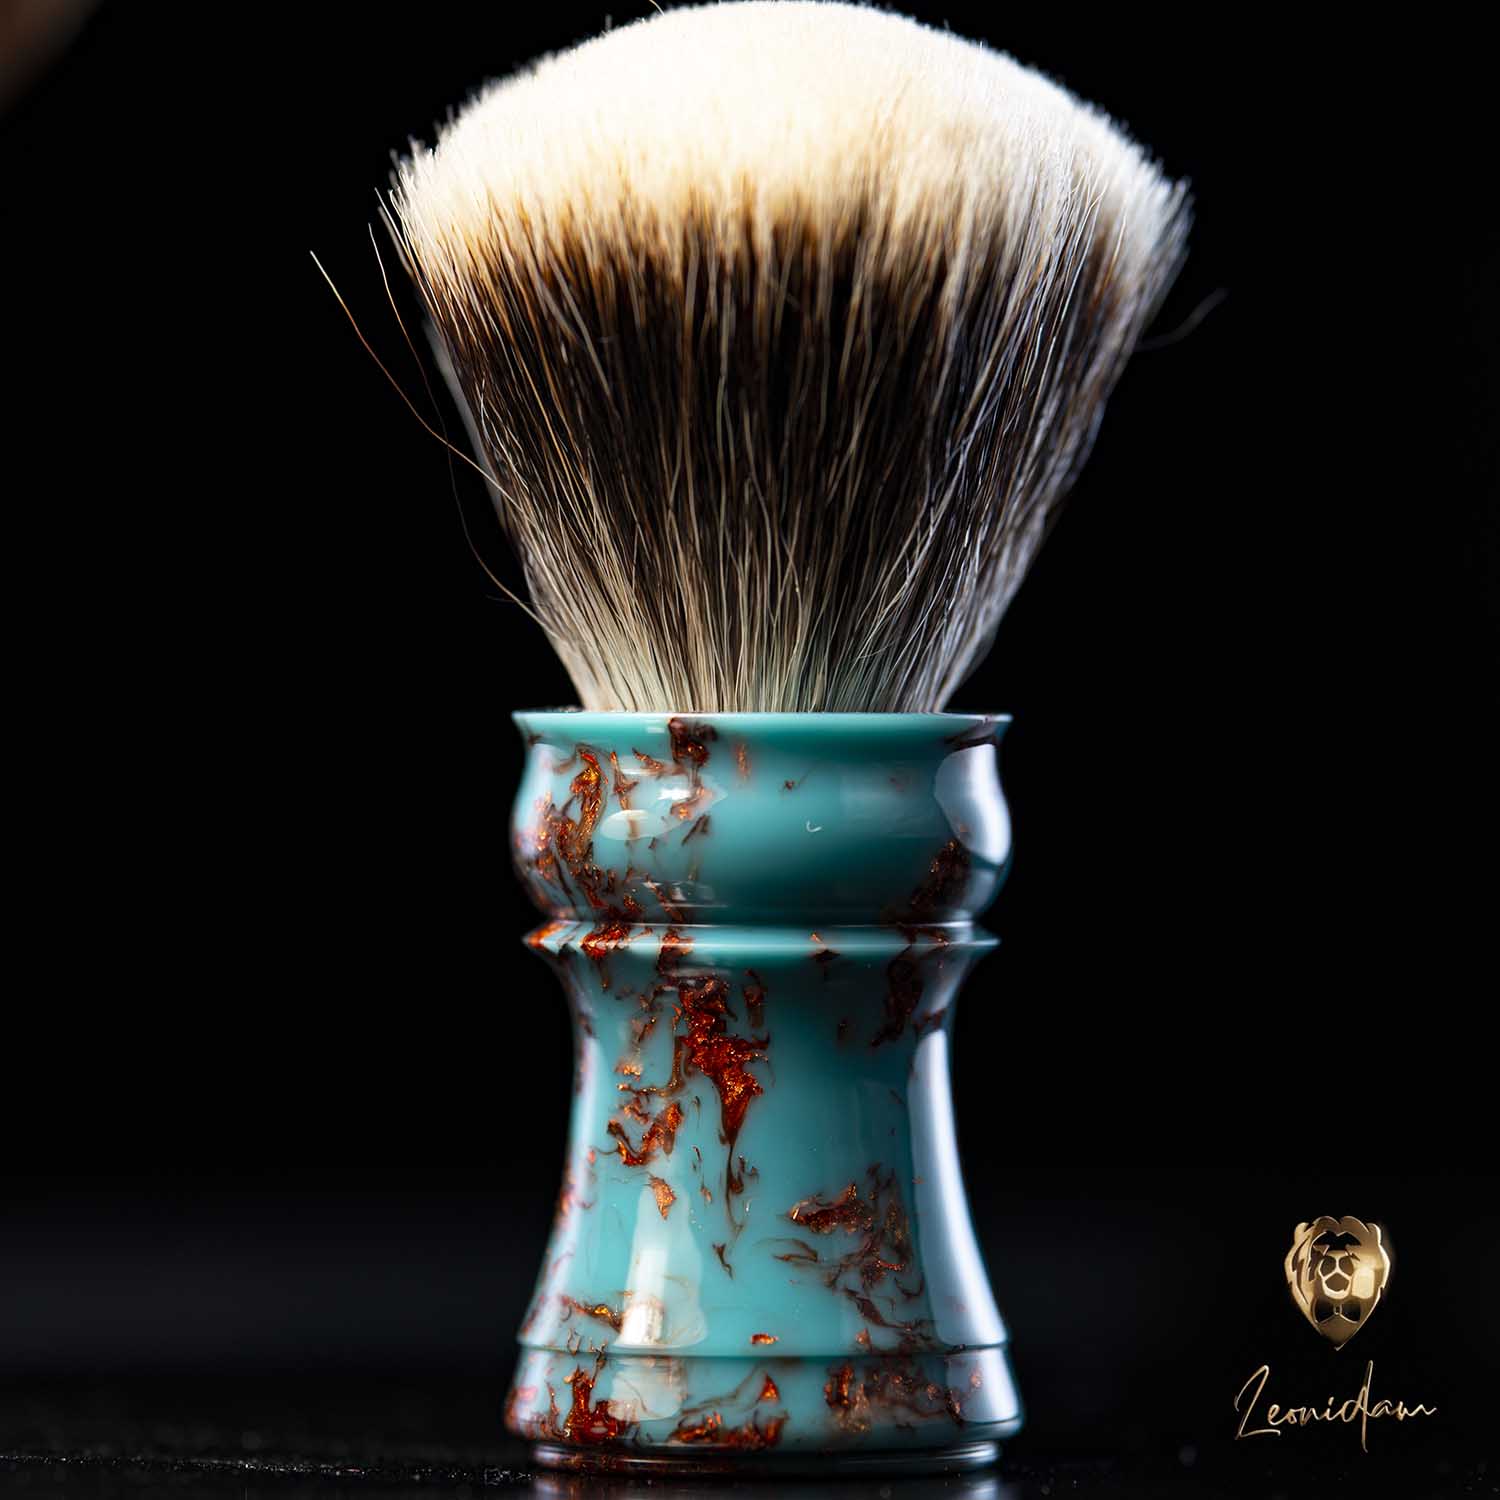 Handmade Shaving Brush "Tumultus" in polished blue and copper resin